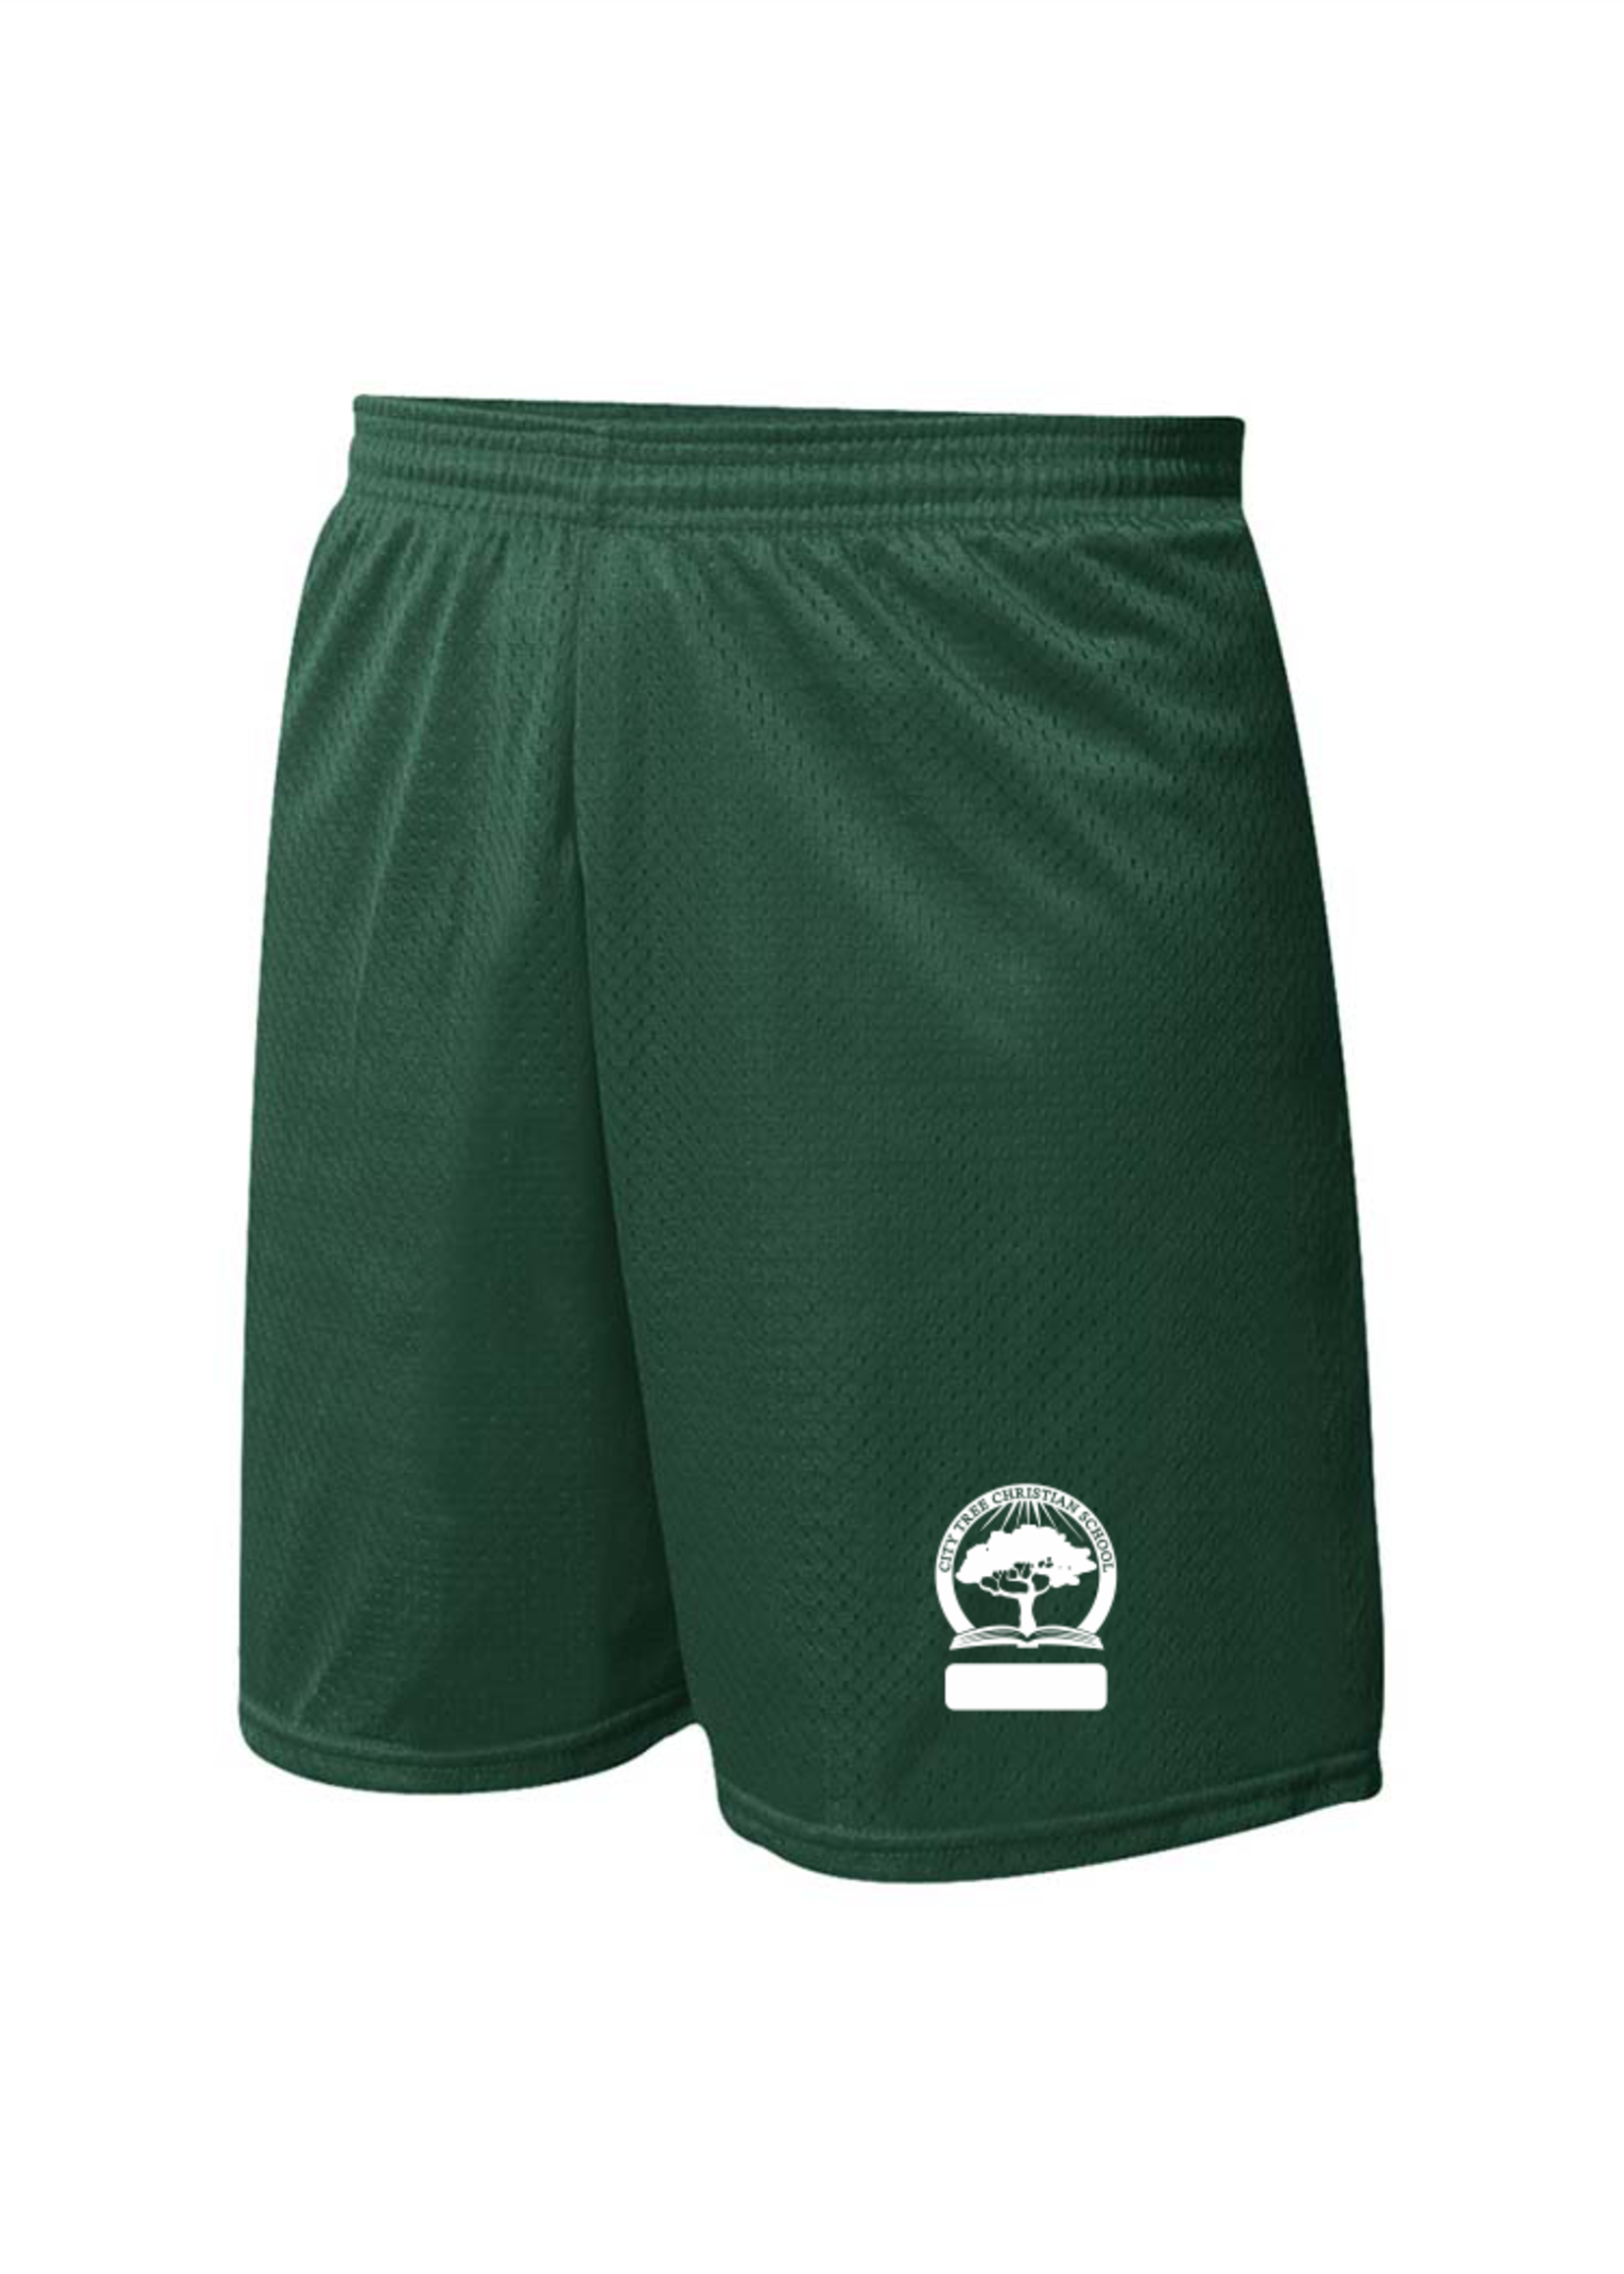 CTCS Forest Mini Mesh PE Shorts